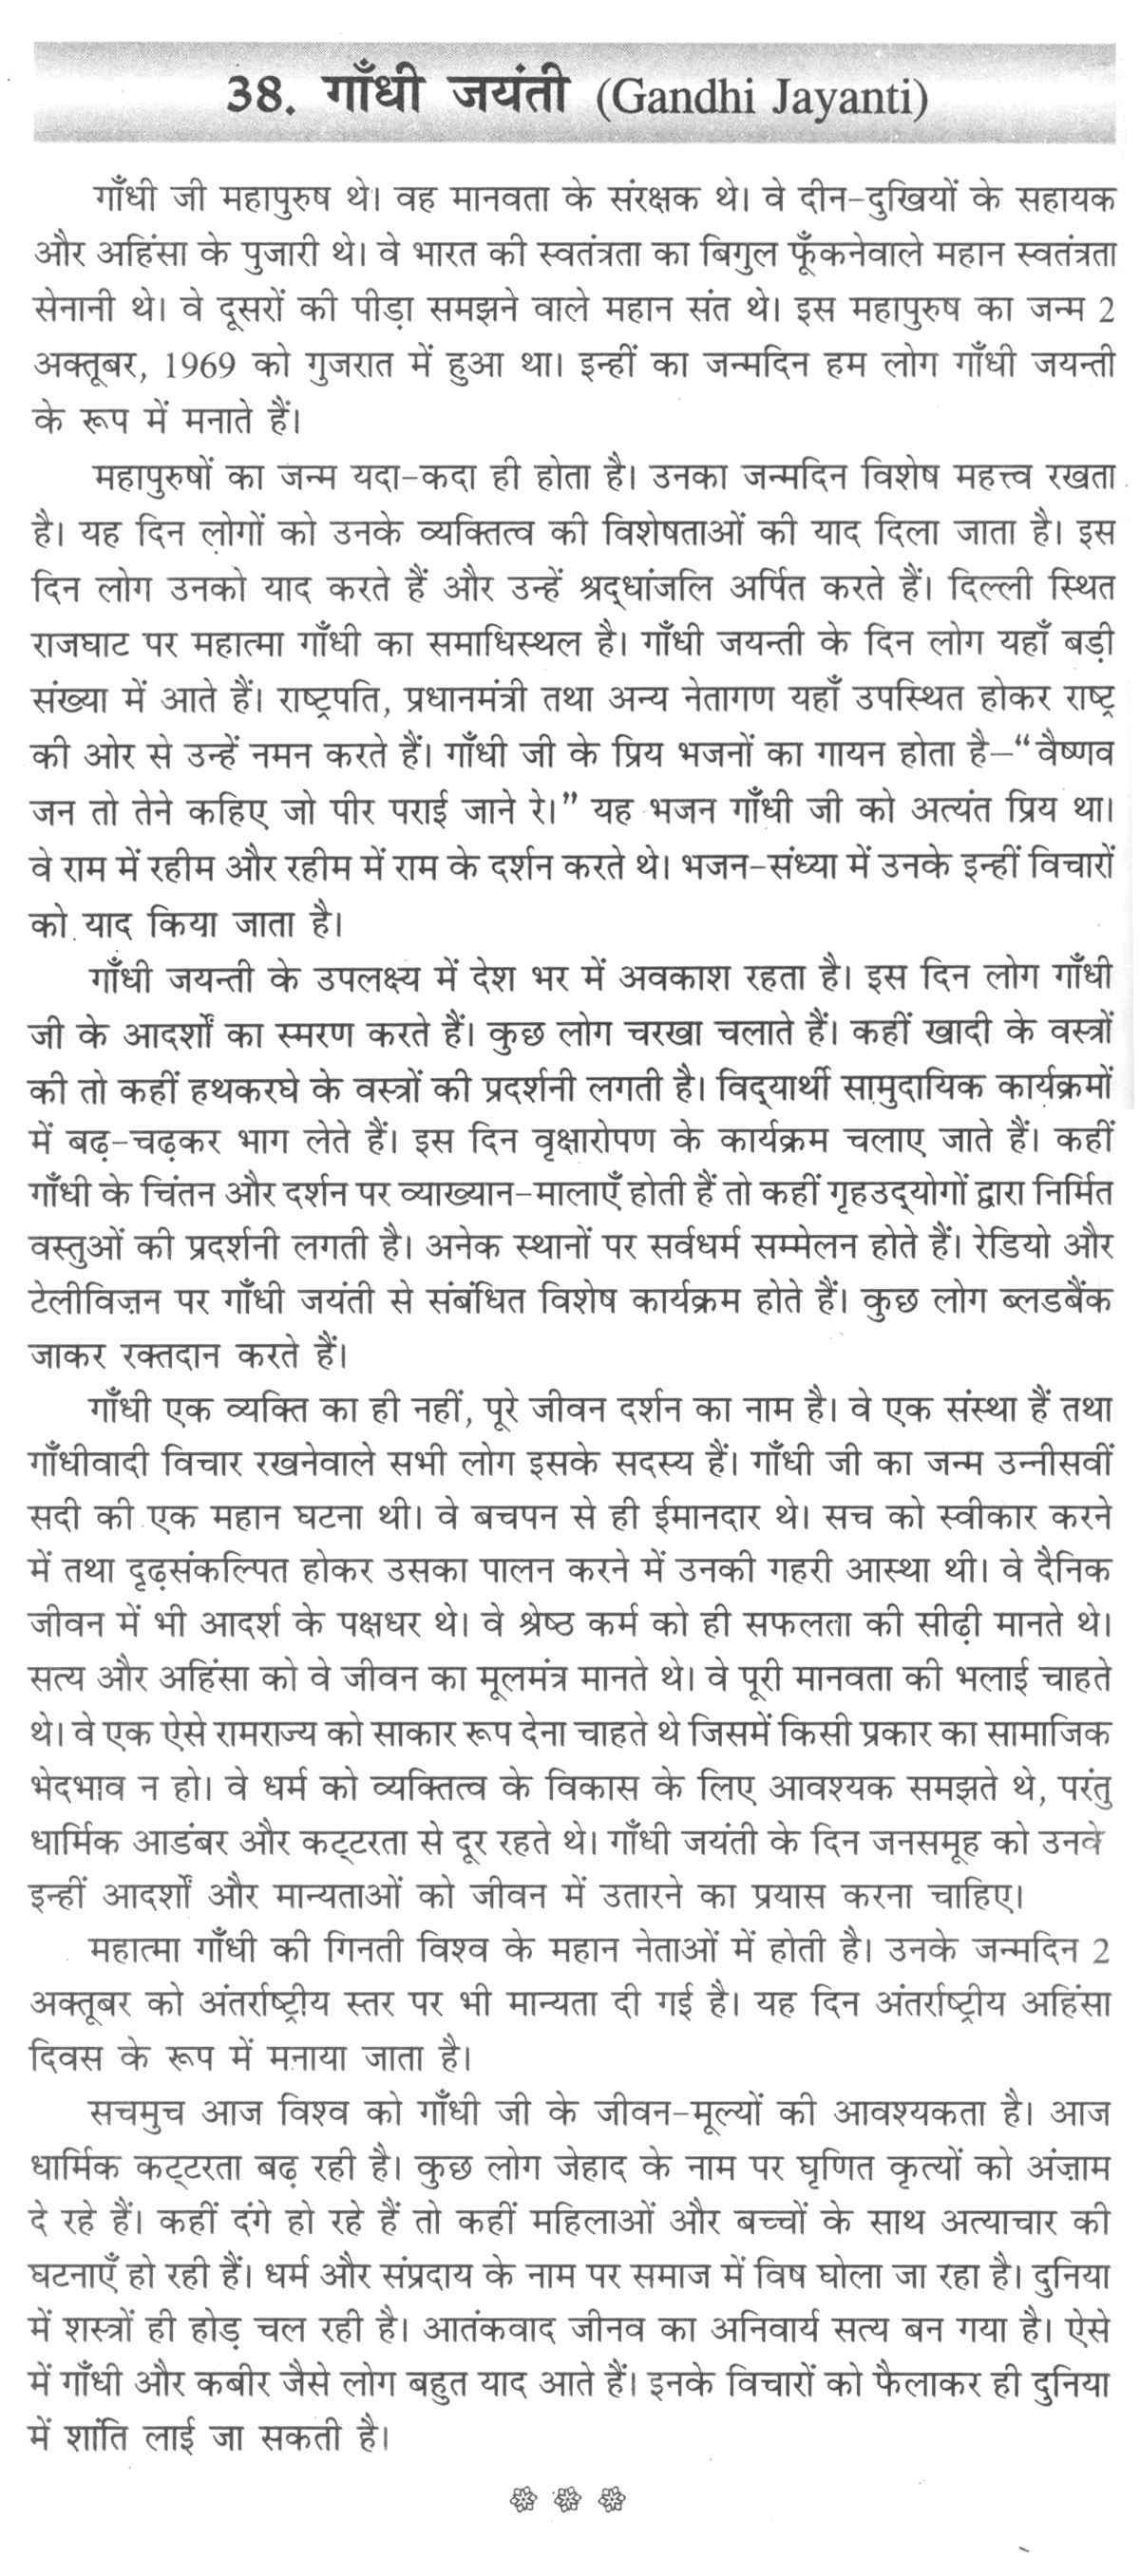 Speech written by mahatma gandhi